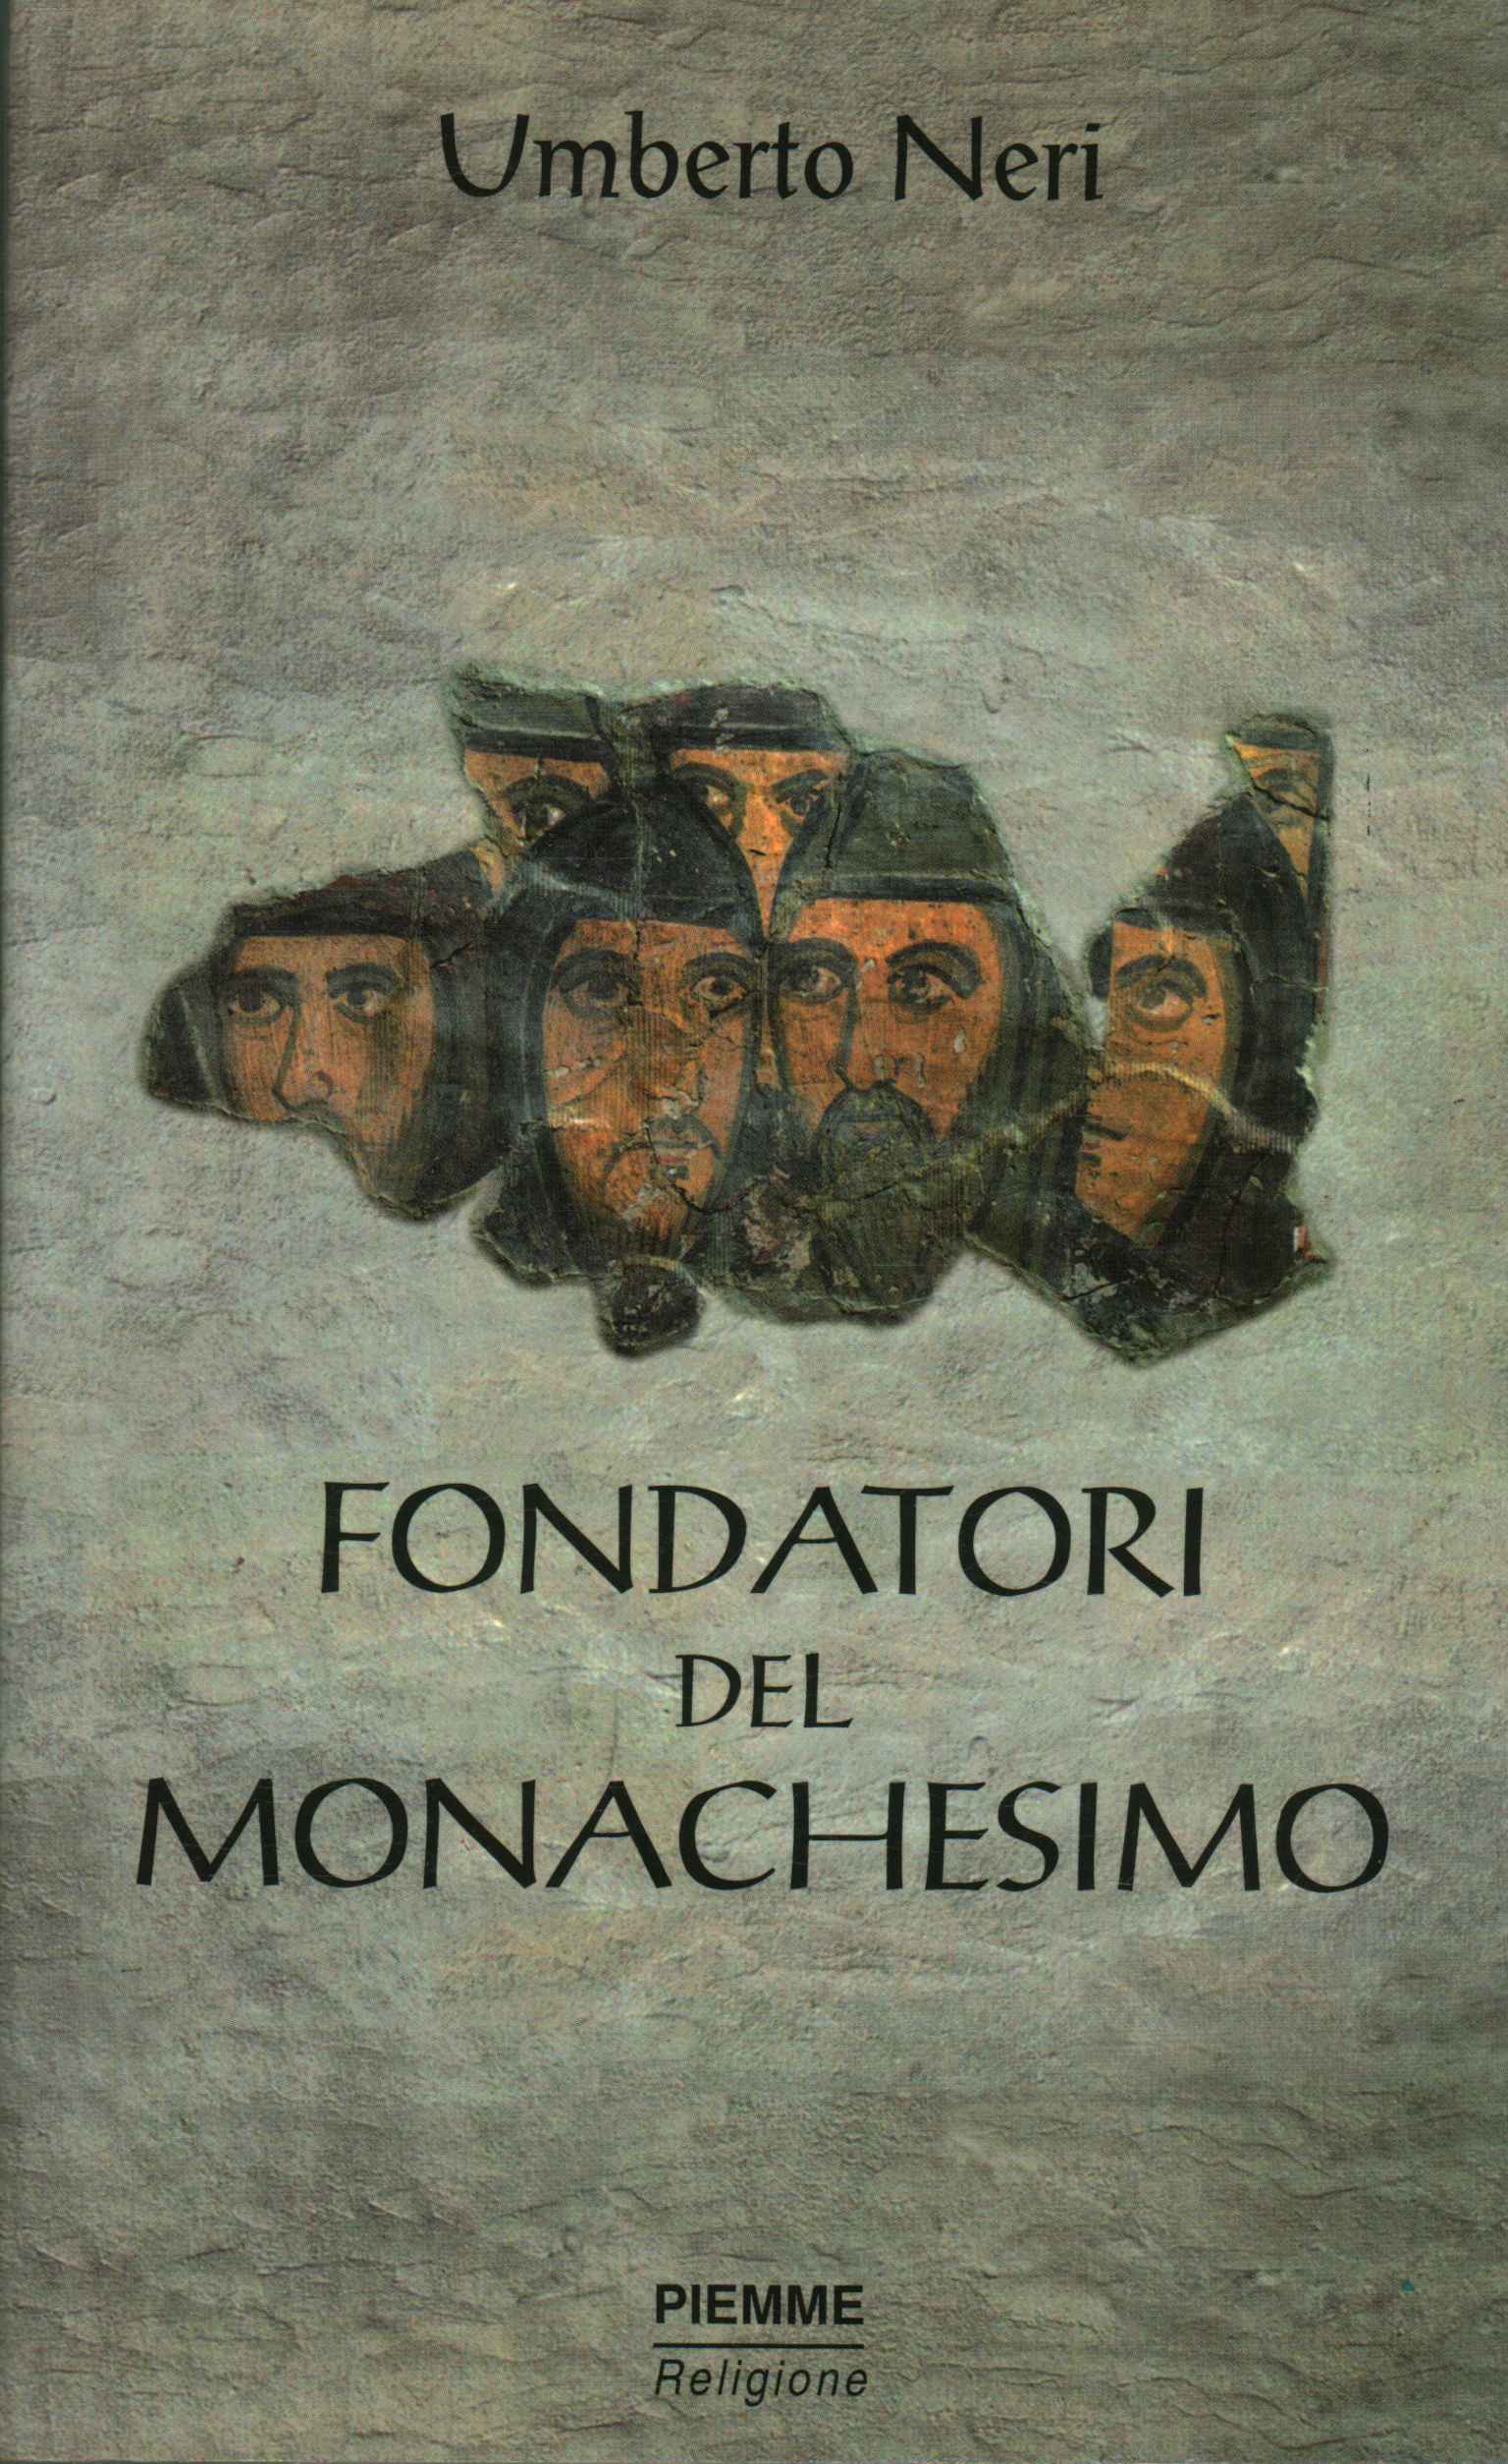 Founders of monasticism